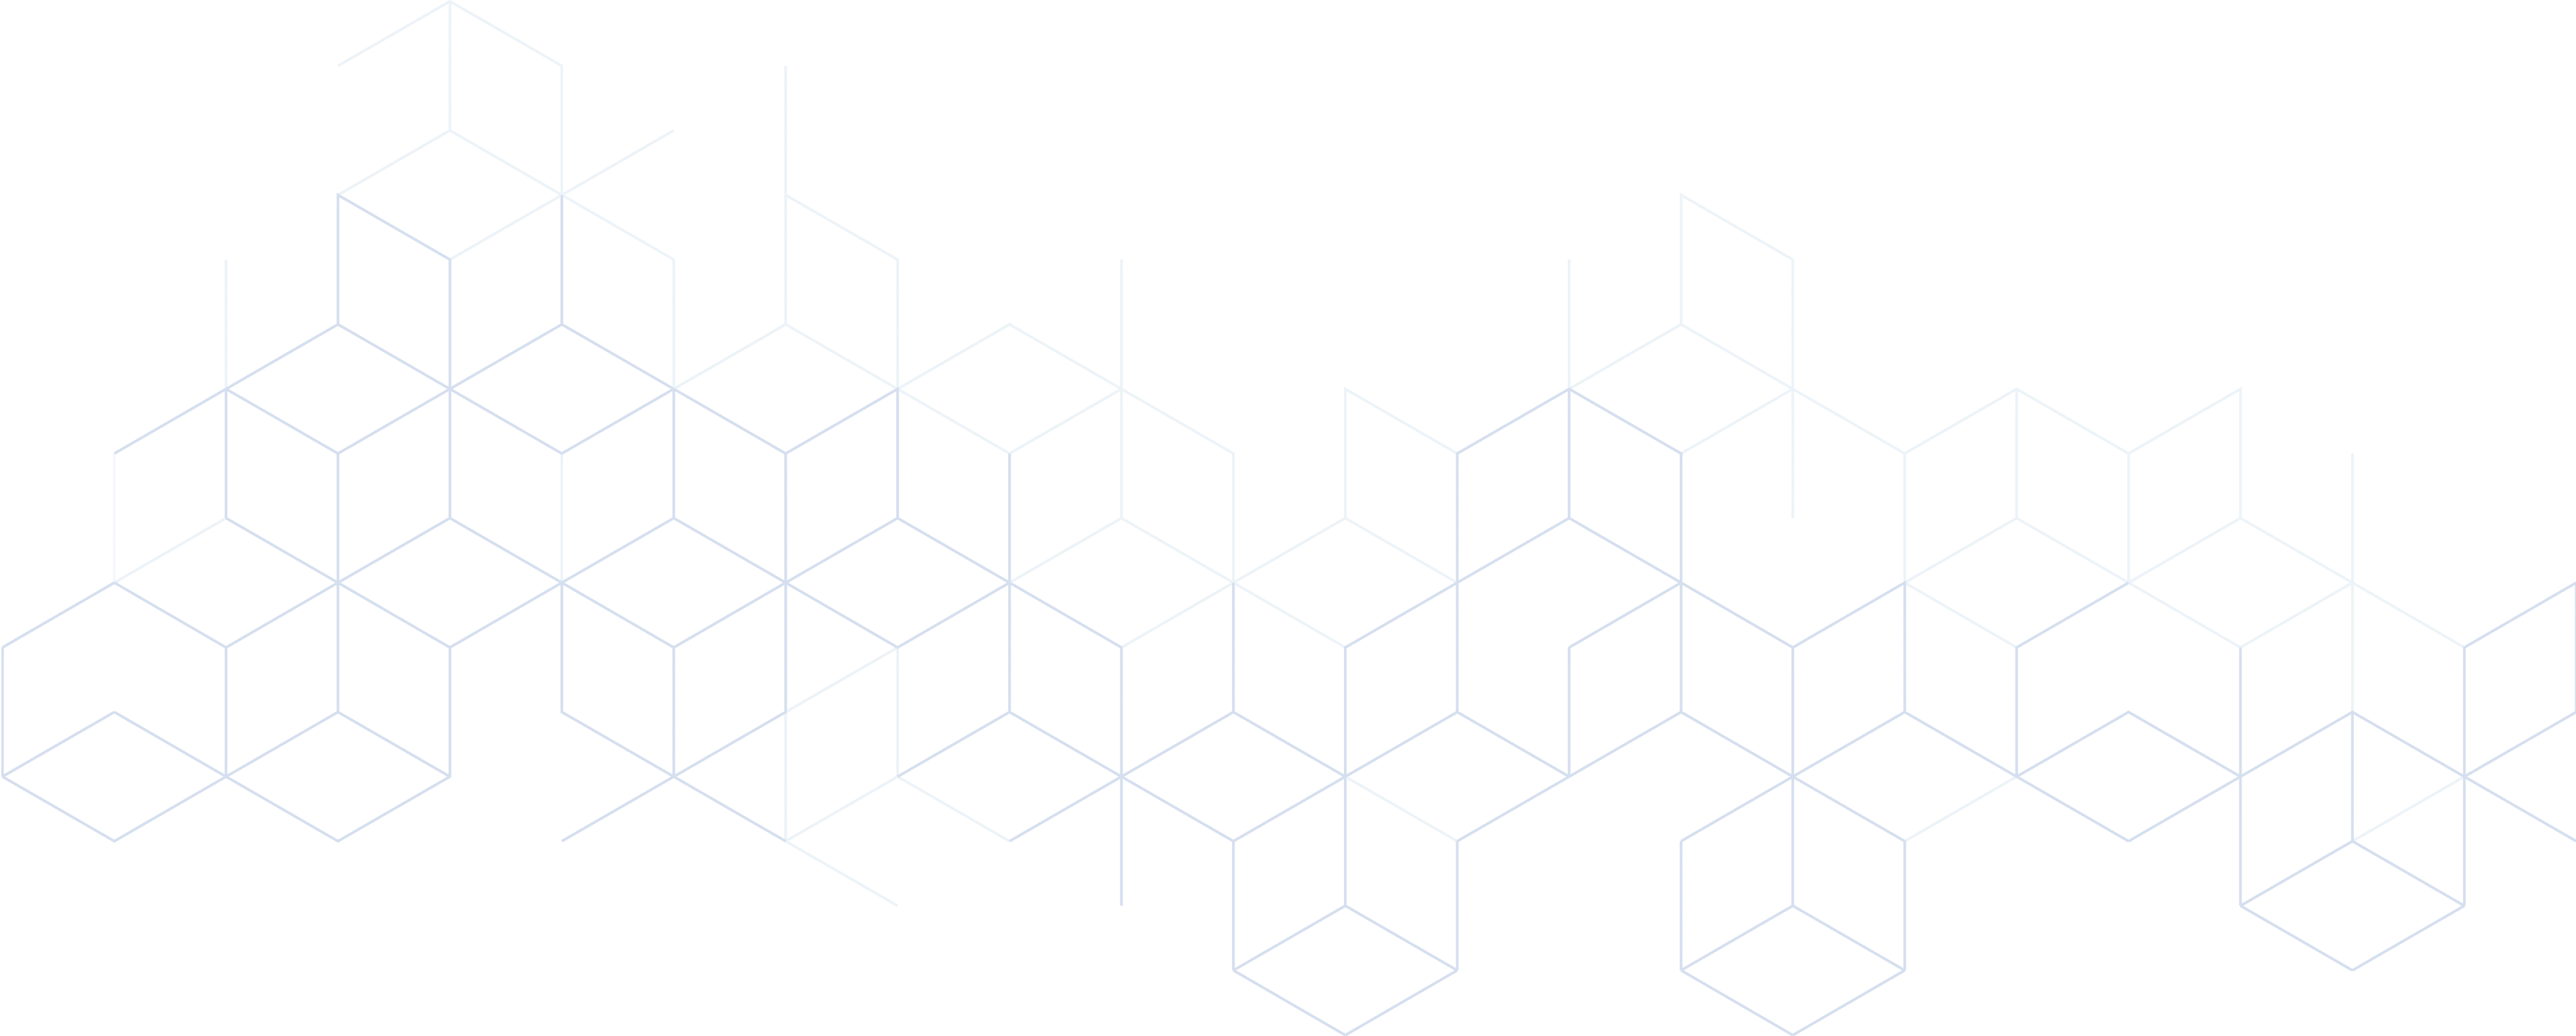 Cube pattern